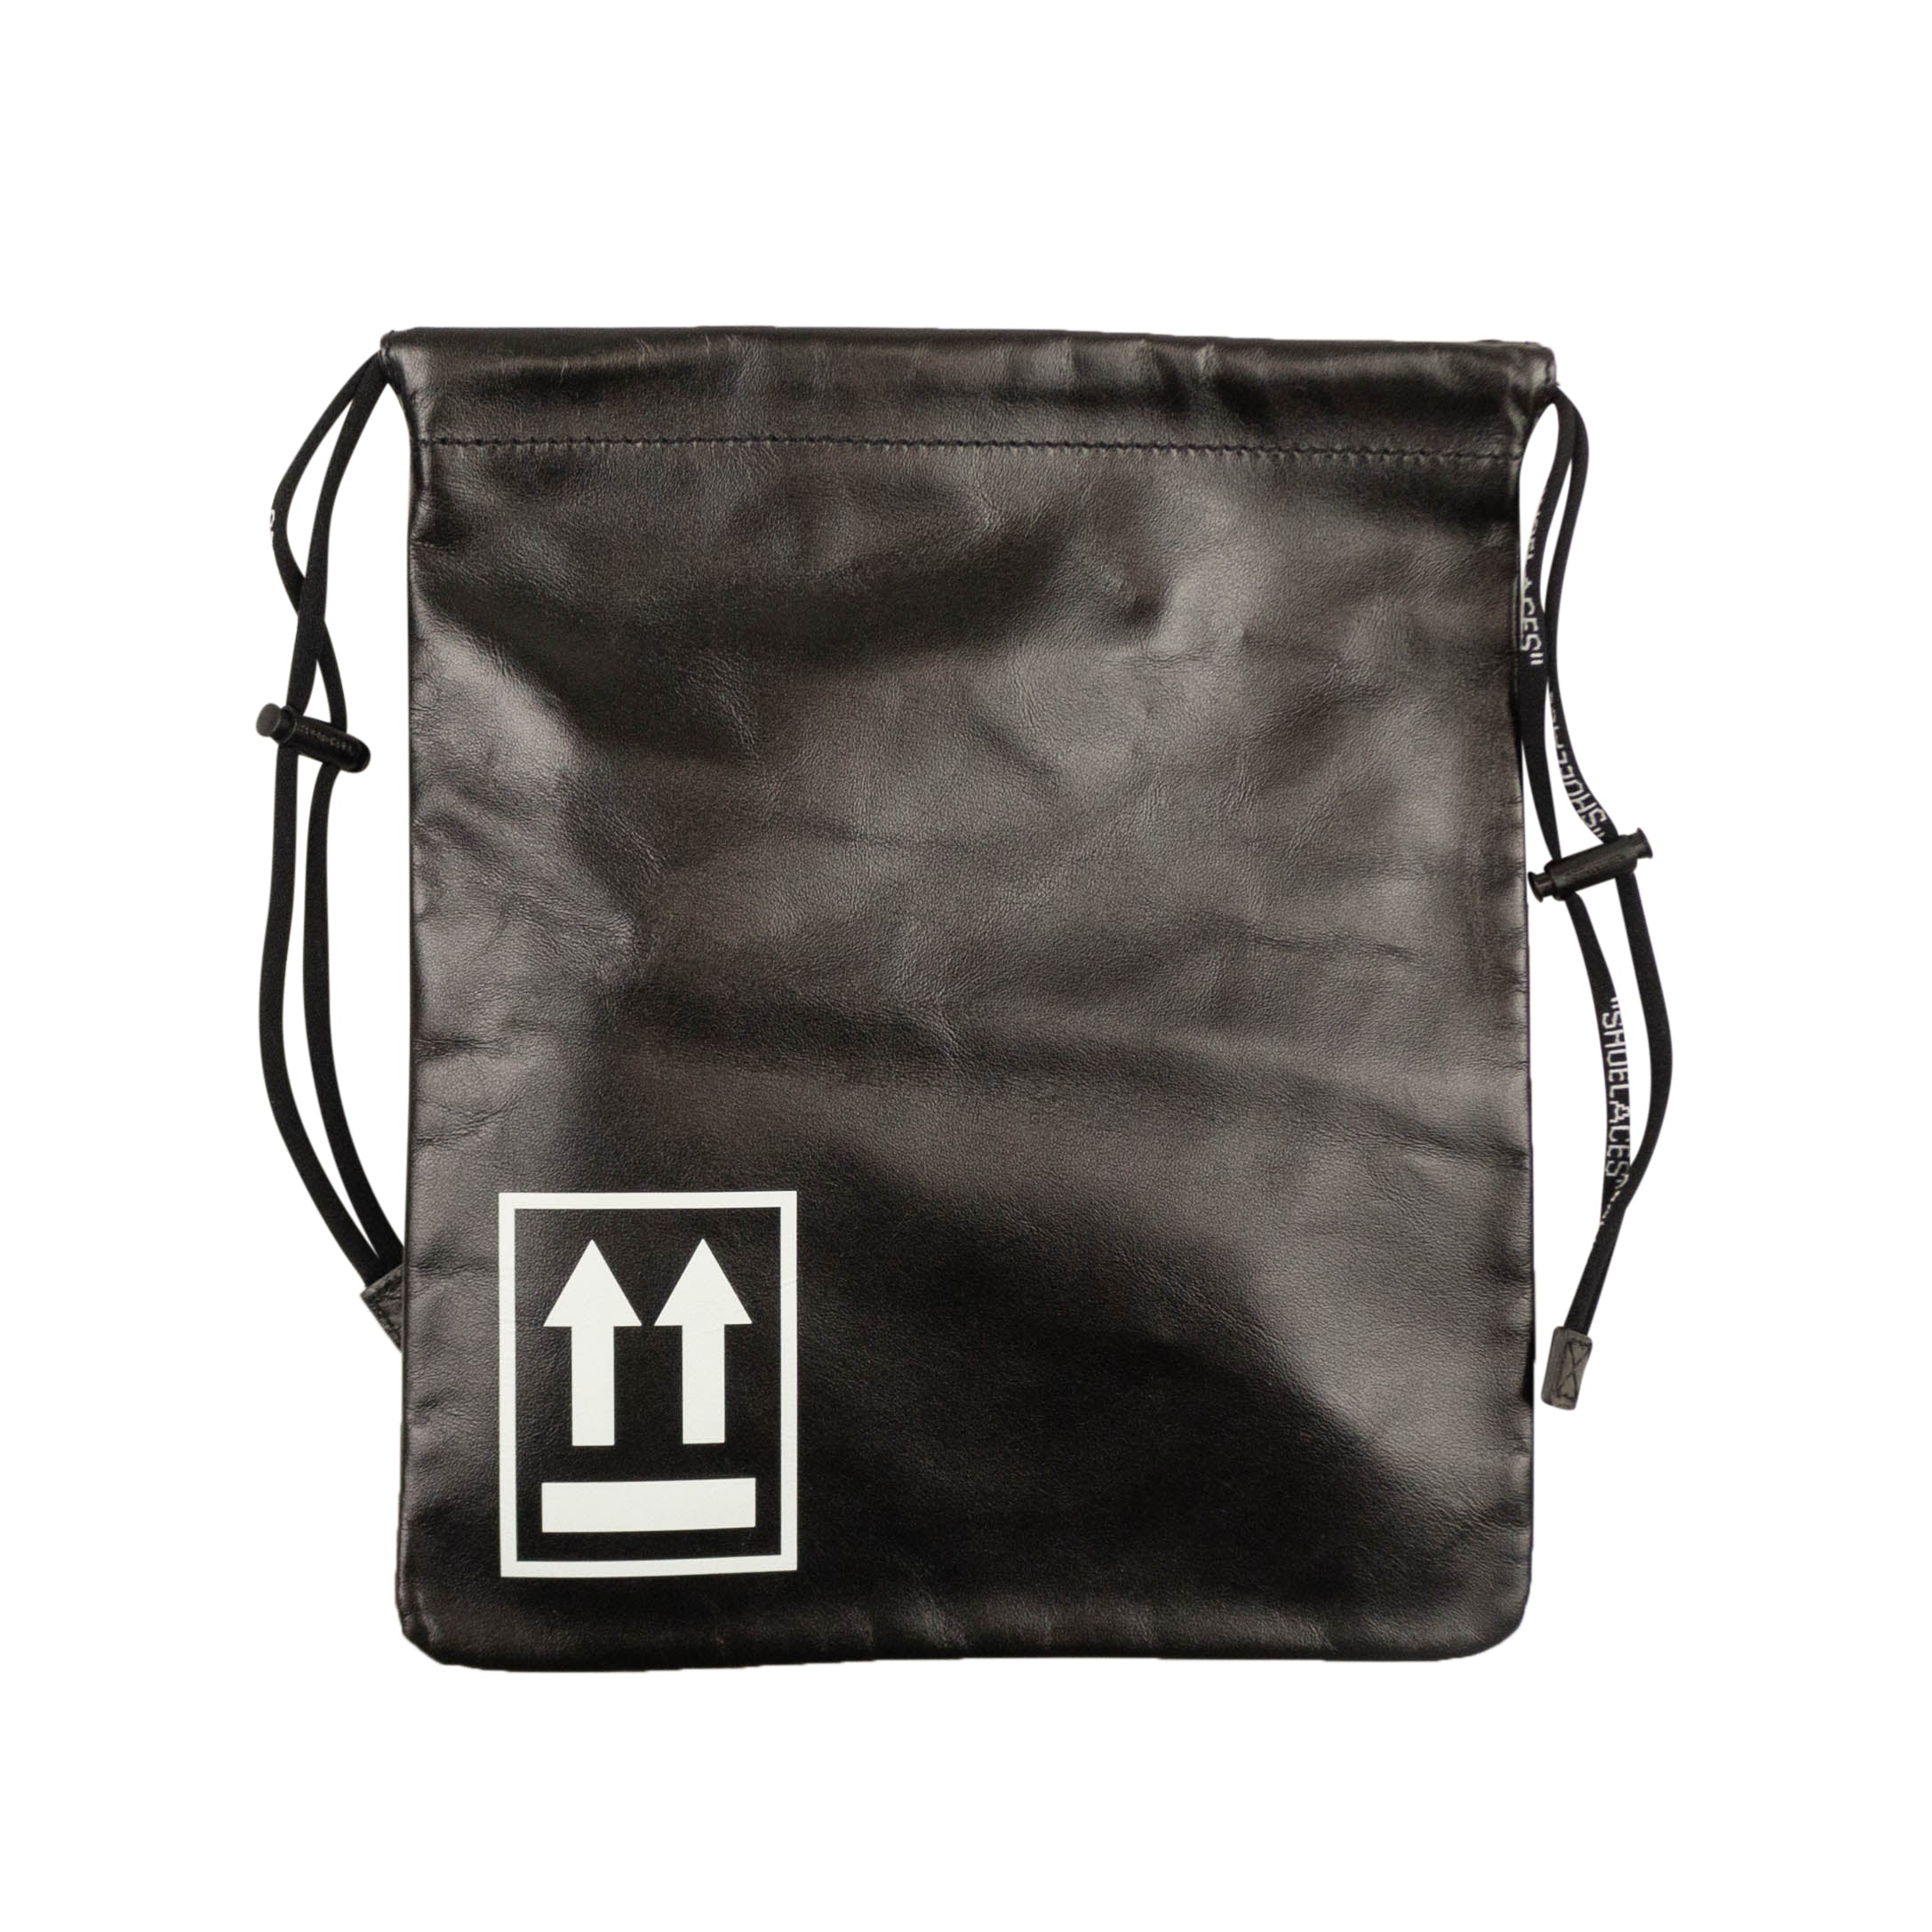 Off-White C/O Virgil Abloh Leather Drawstring Bag - Black